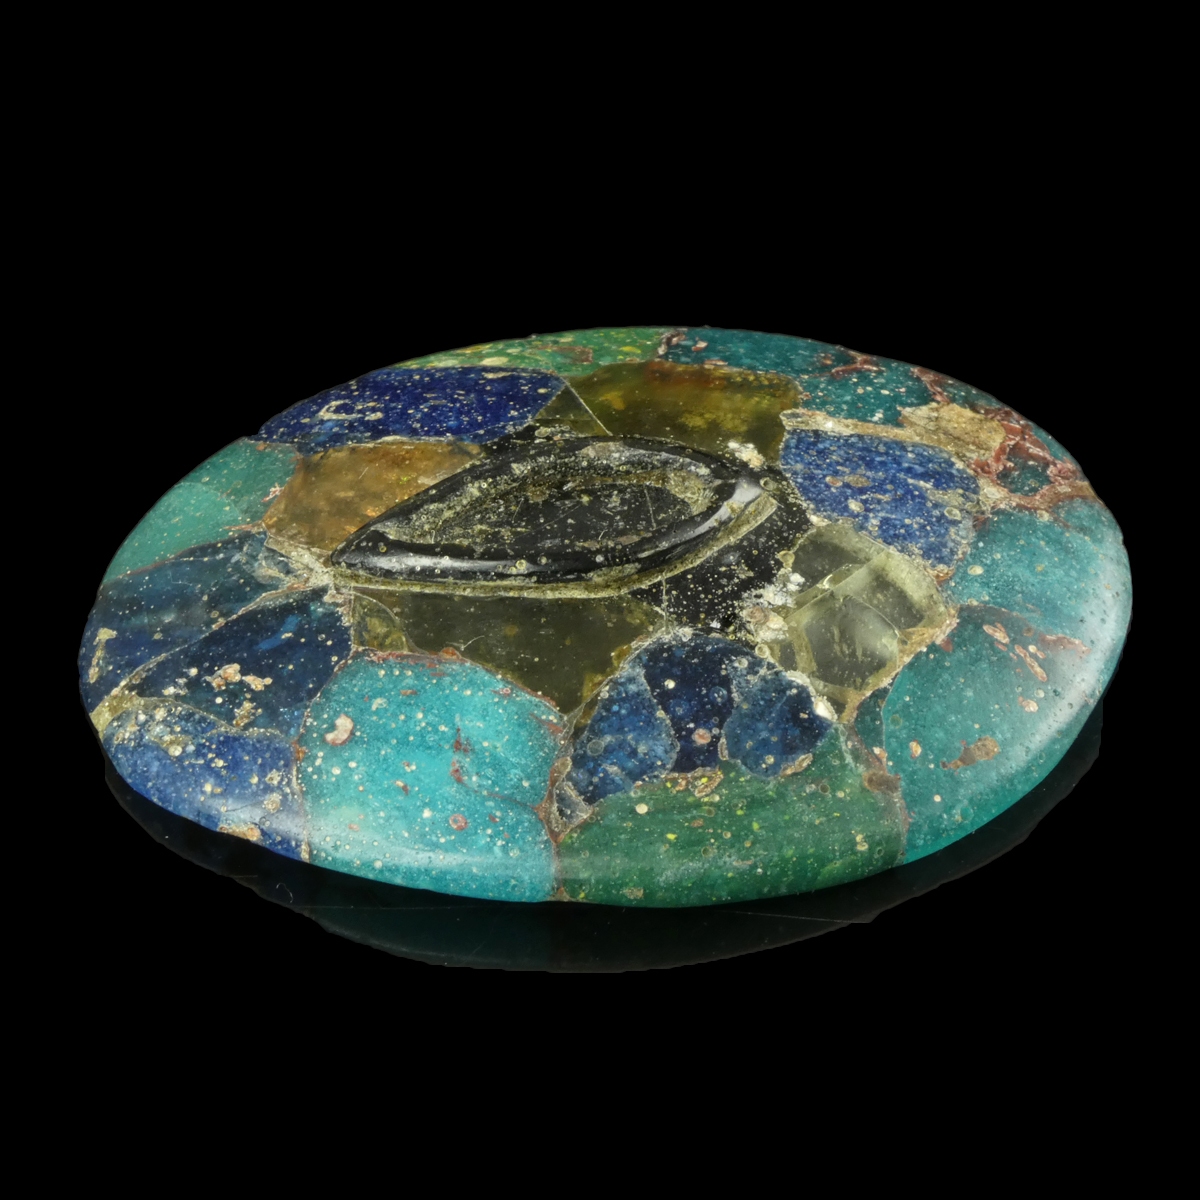 Ancient Roman mosaic glass dish